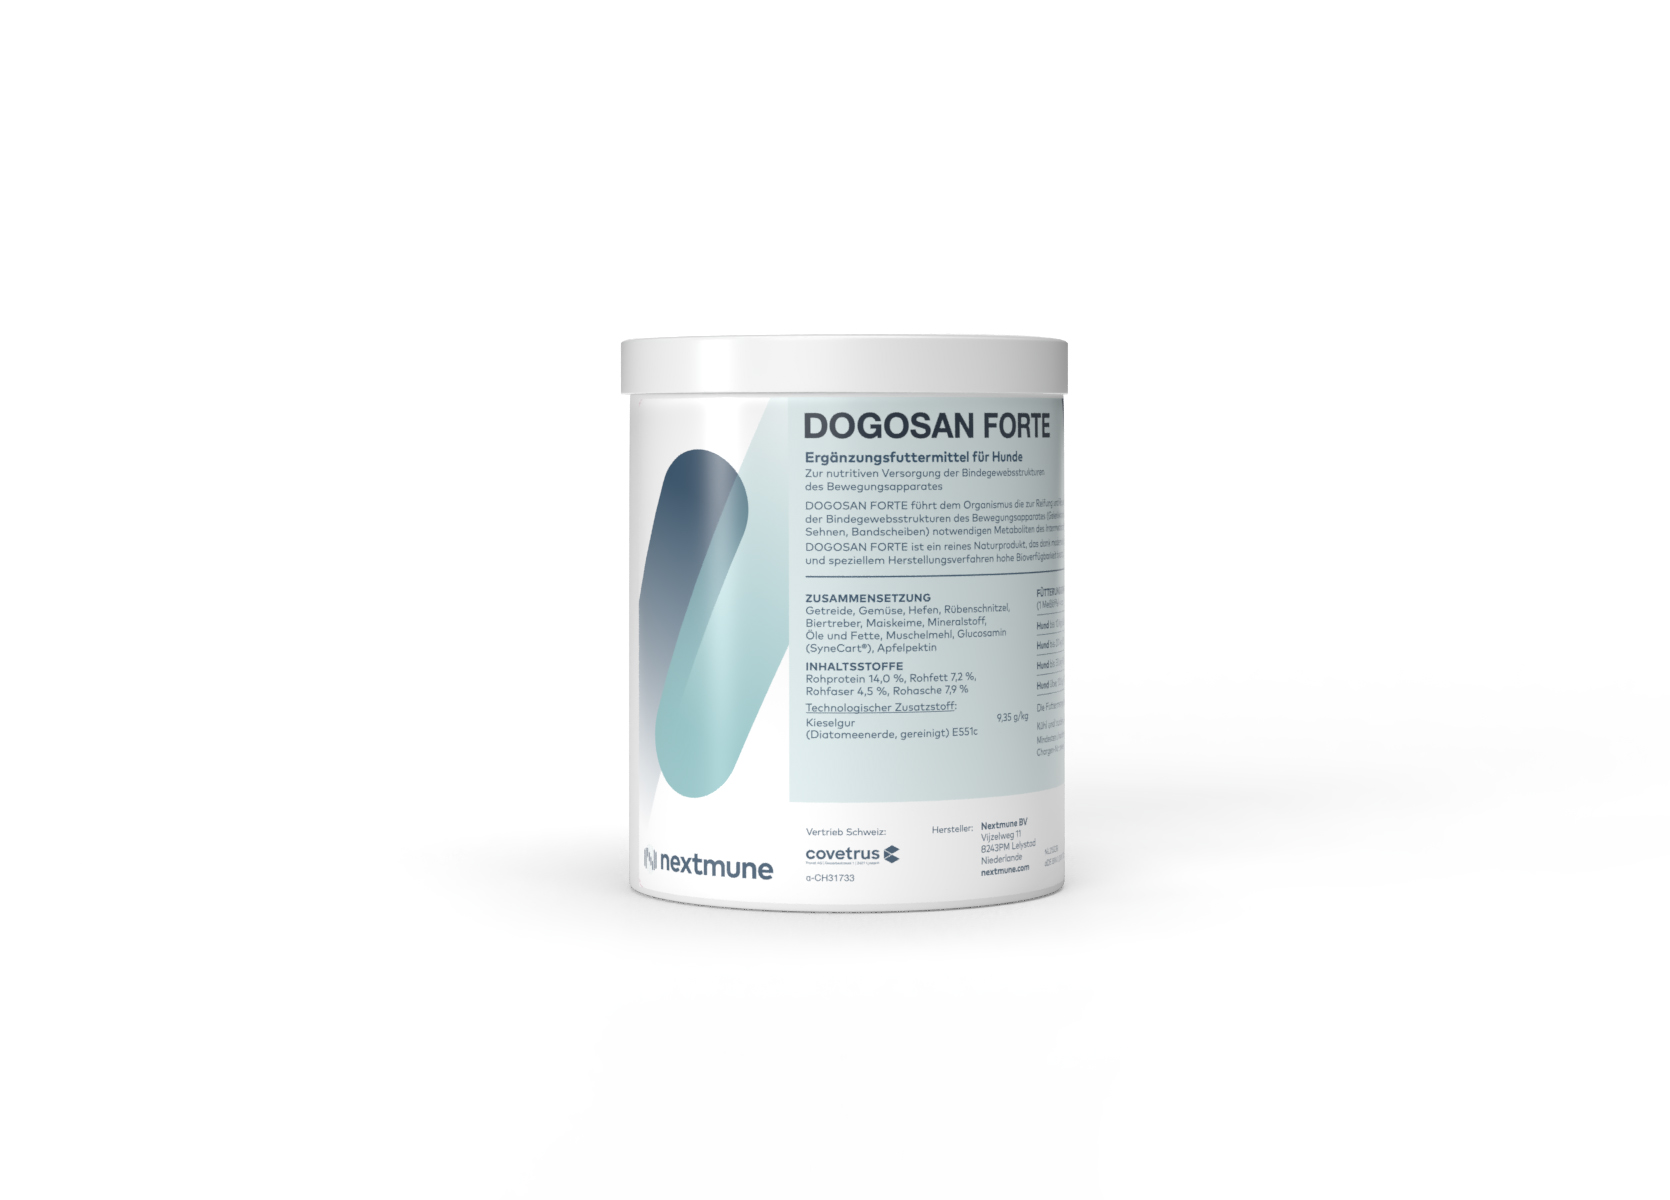 Dogosan Forte 675 g Ergänzungsfuttermittel für Hunde